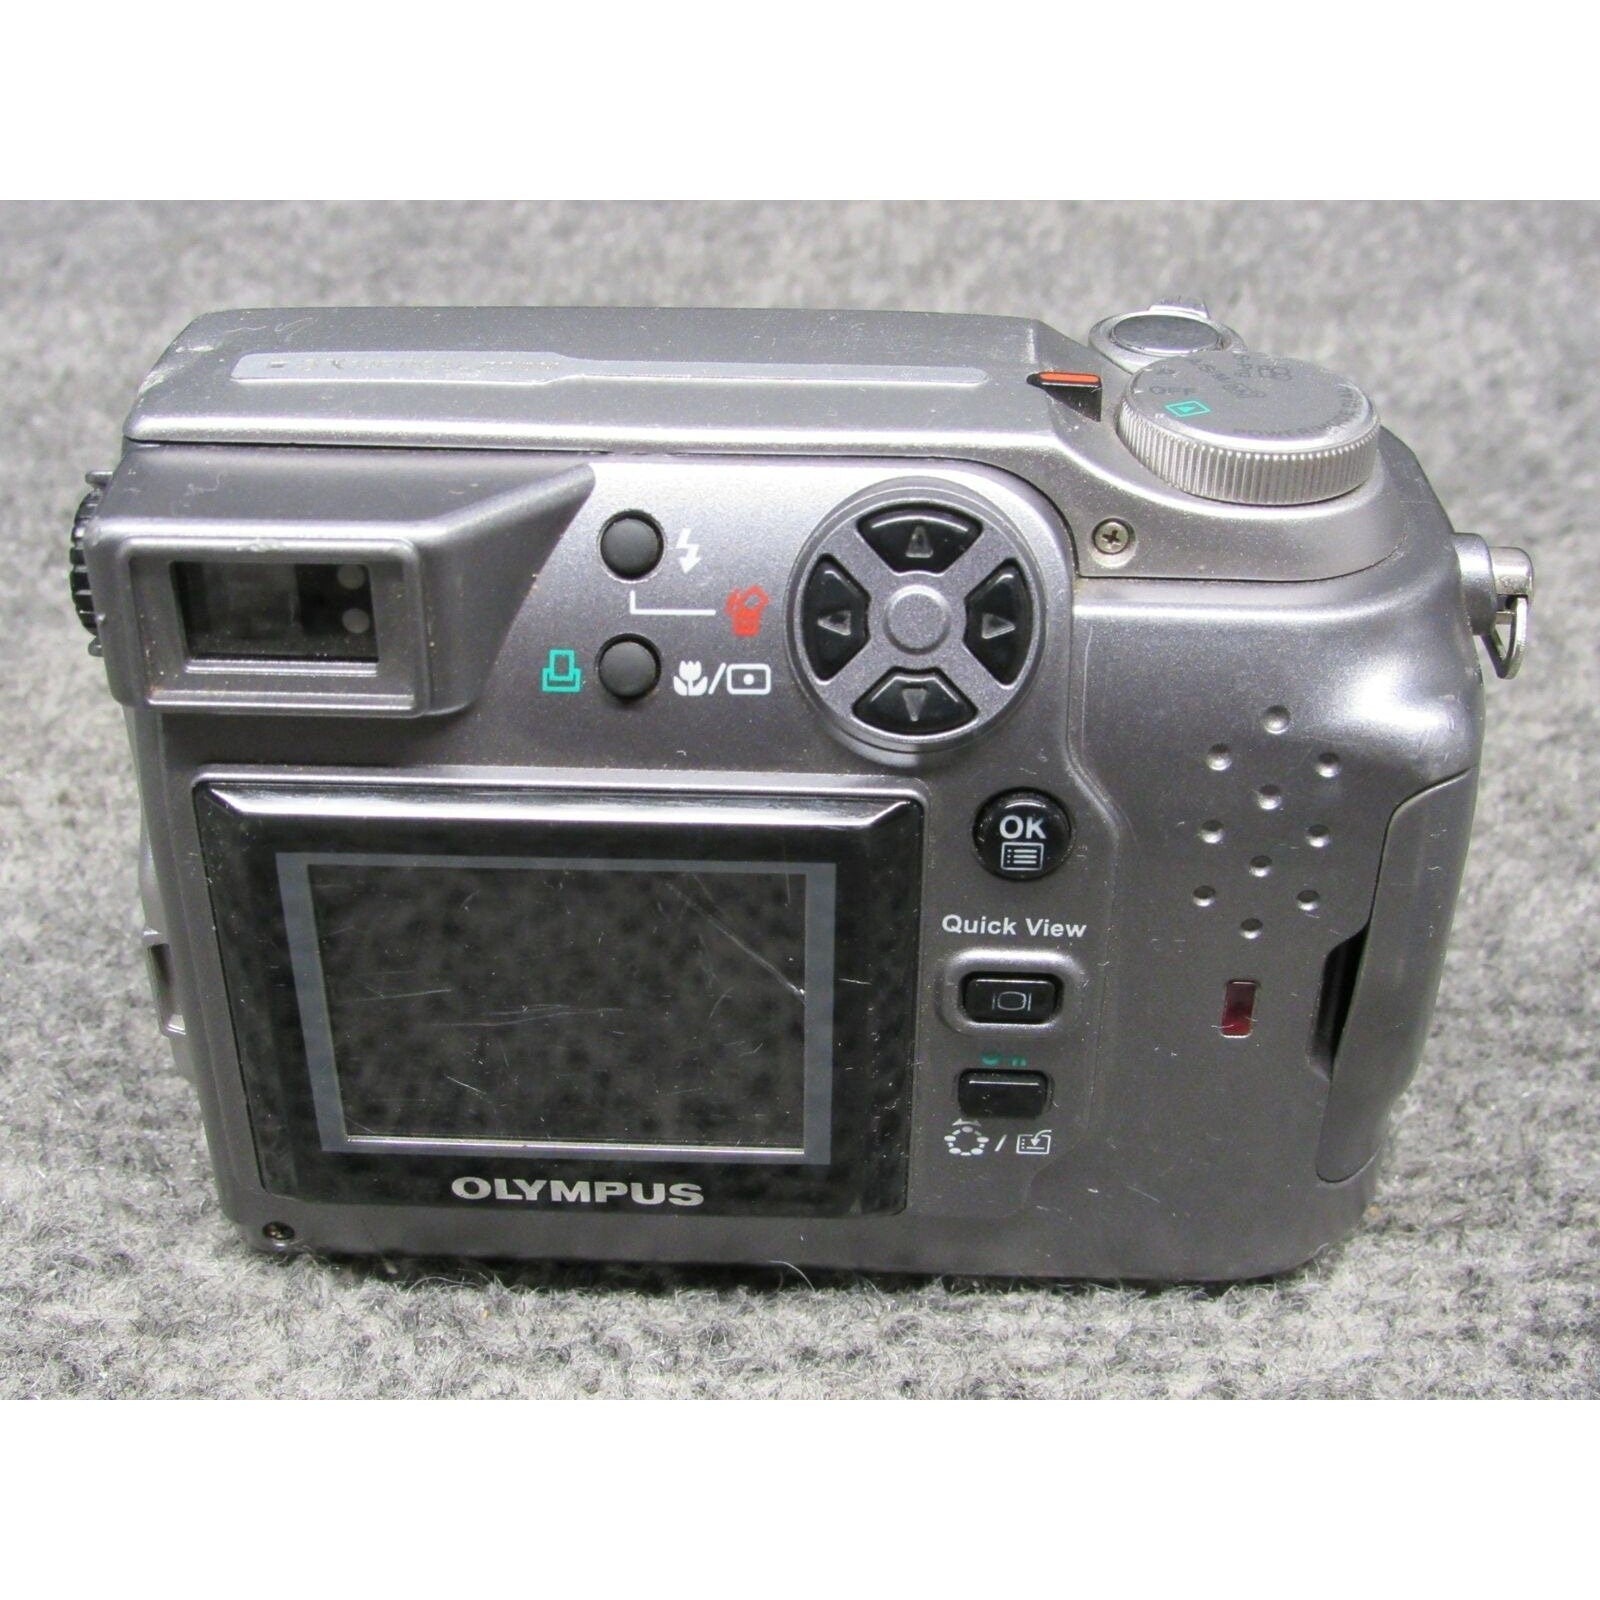 Olympus Camedia C-4000 ZOOM 4.0MP 3x Optical Zoom Digital Camera